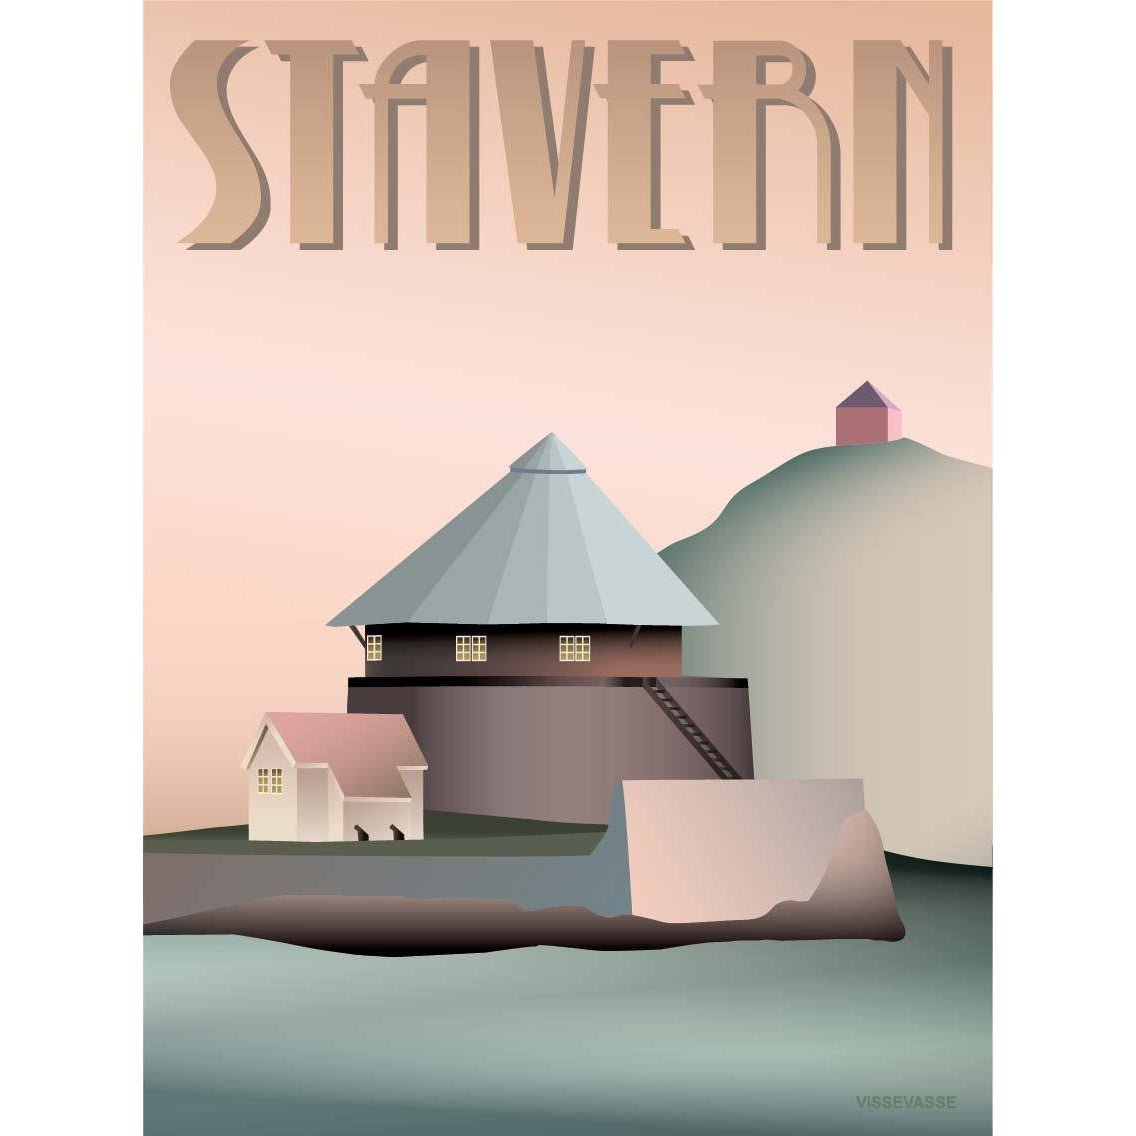 Poster Cittadel di Vissevasse Stavern, 15 x21 cm